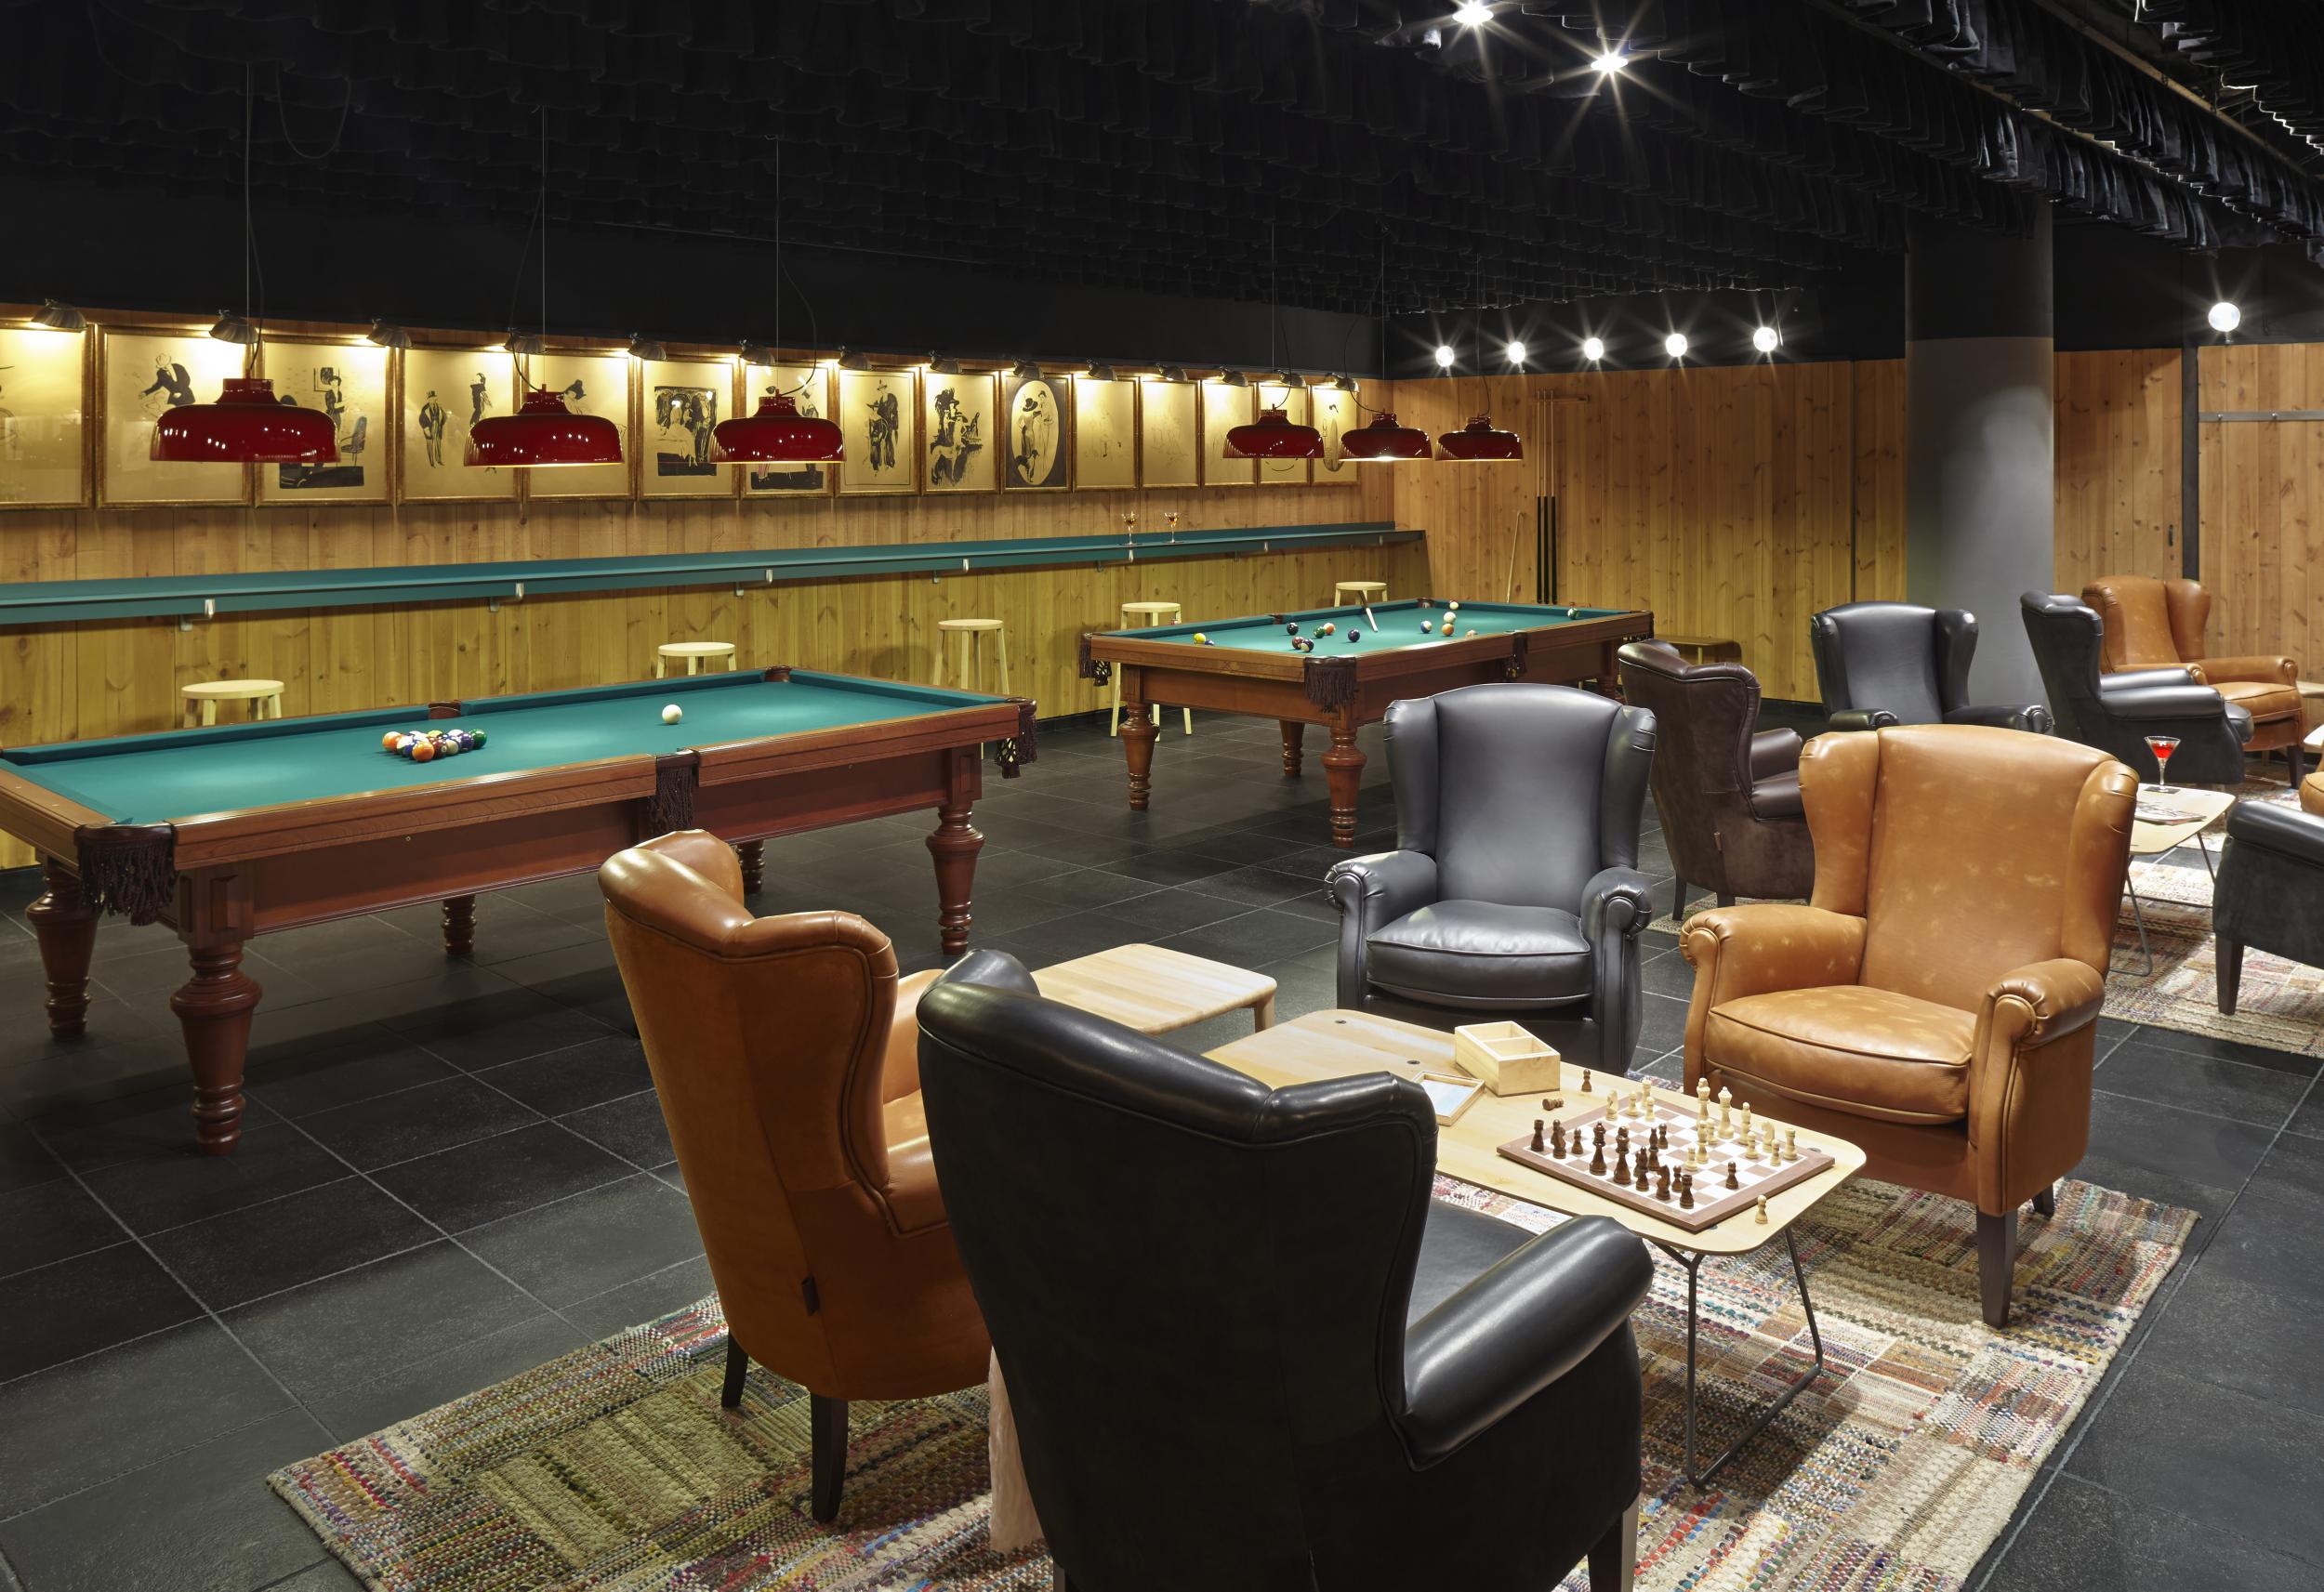 The billiards room at Casa Camper